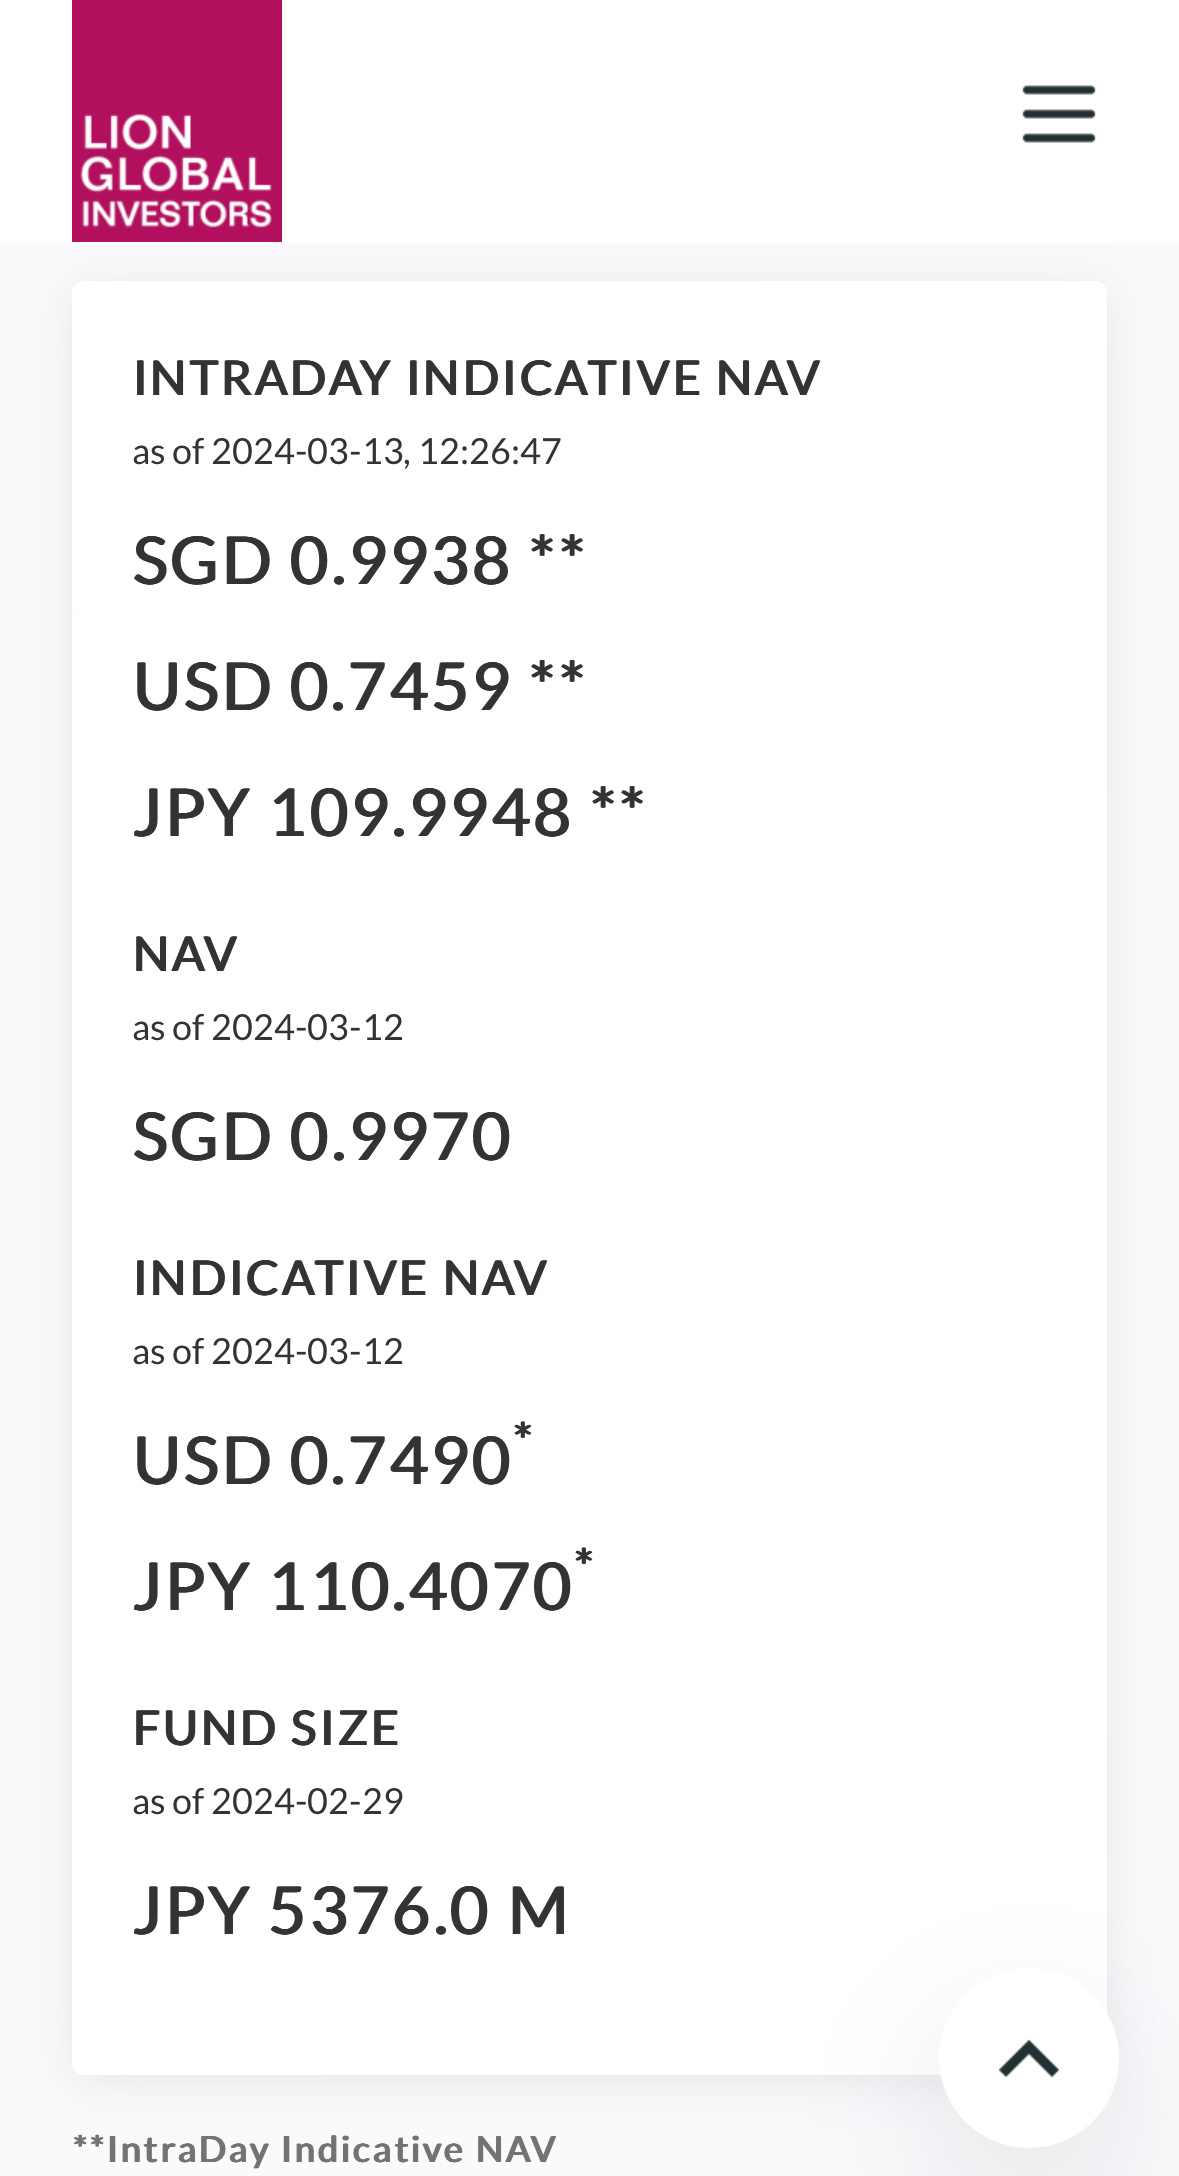 $Lion-Nomura Japan Active ETF (Powered by AI) (JJJ.SG)$ Latest Nav value on issuer website. Trading at around 0.6% premium